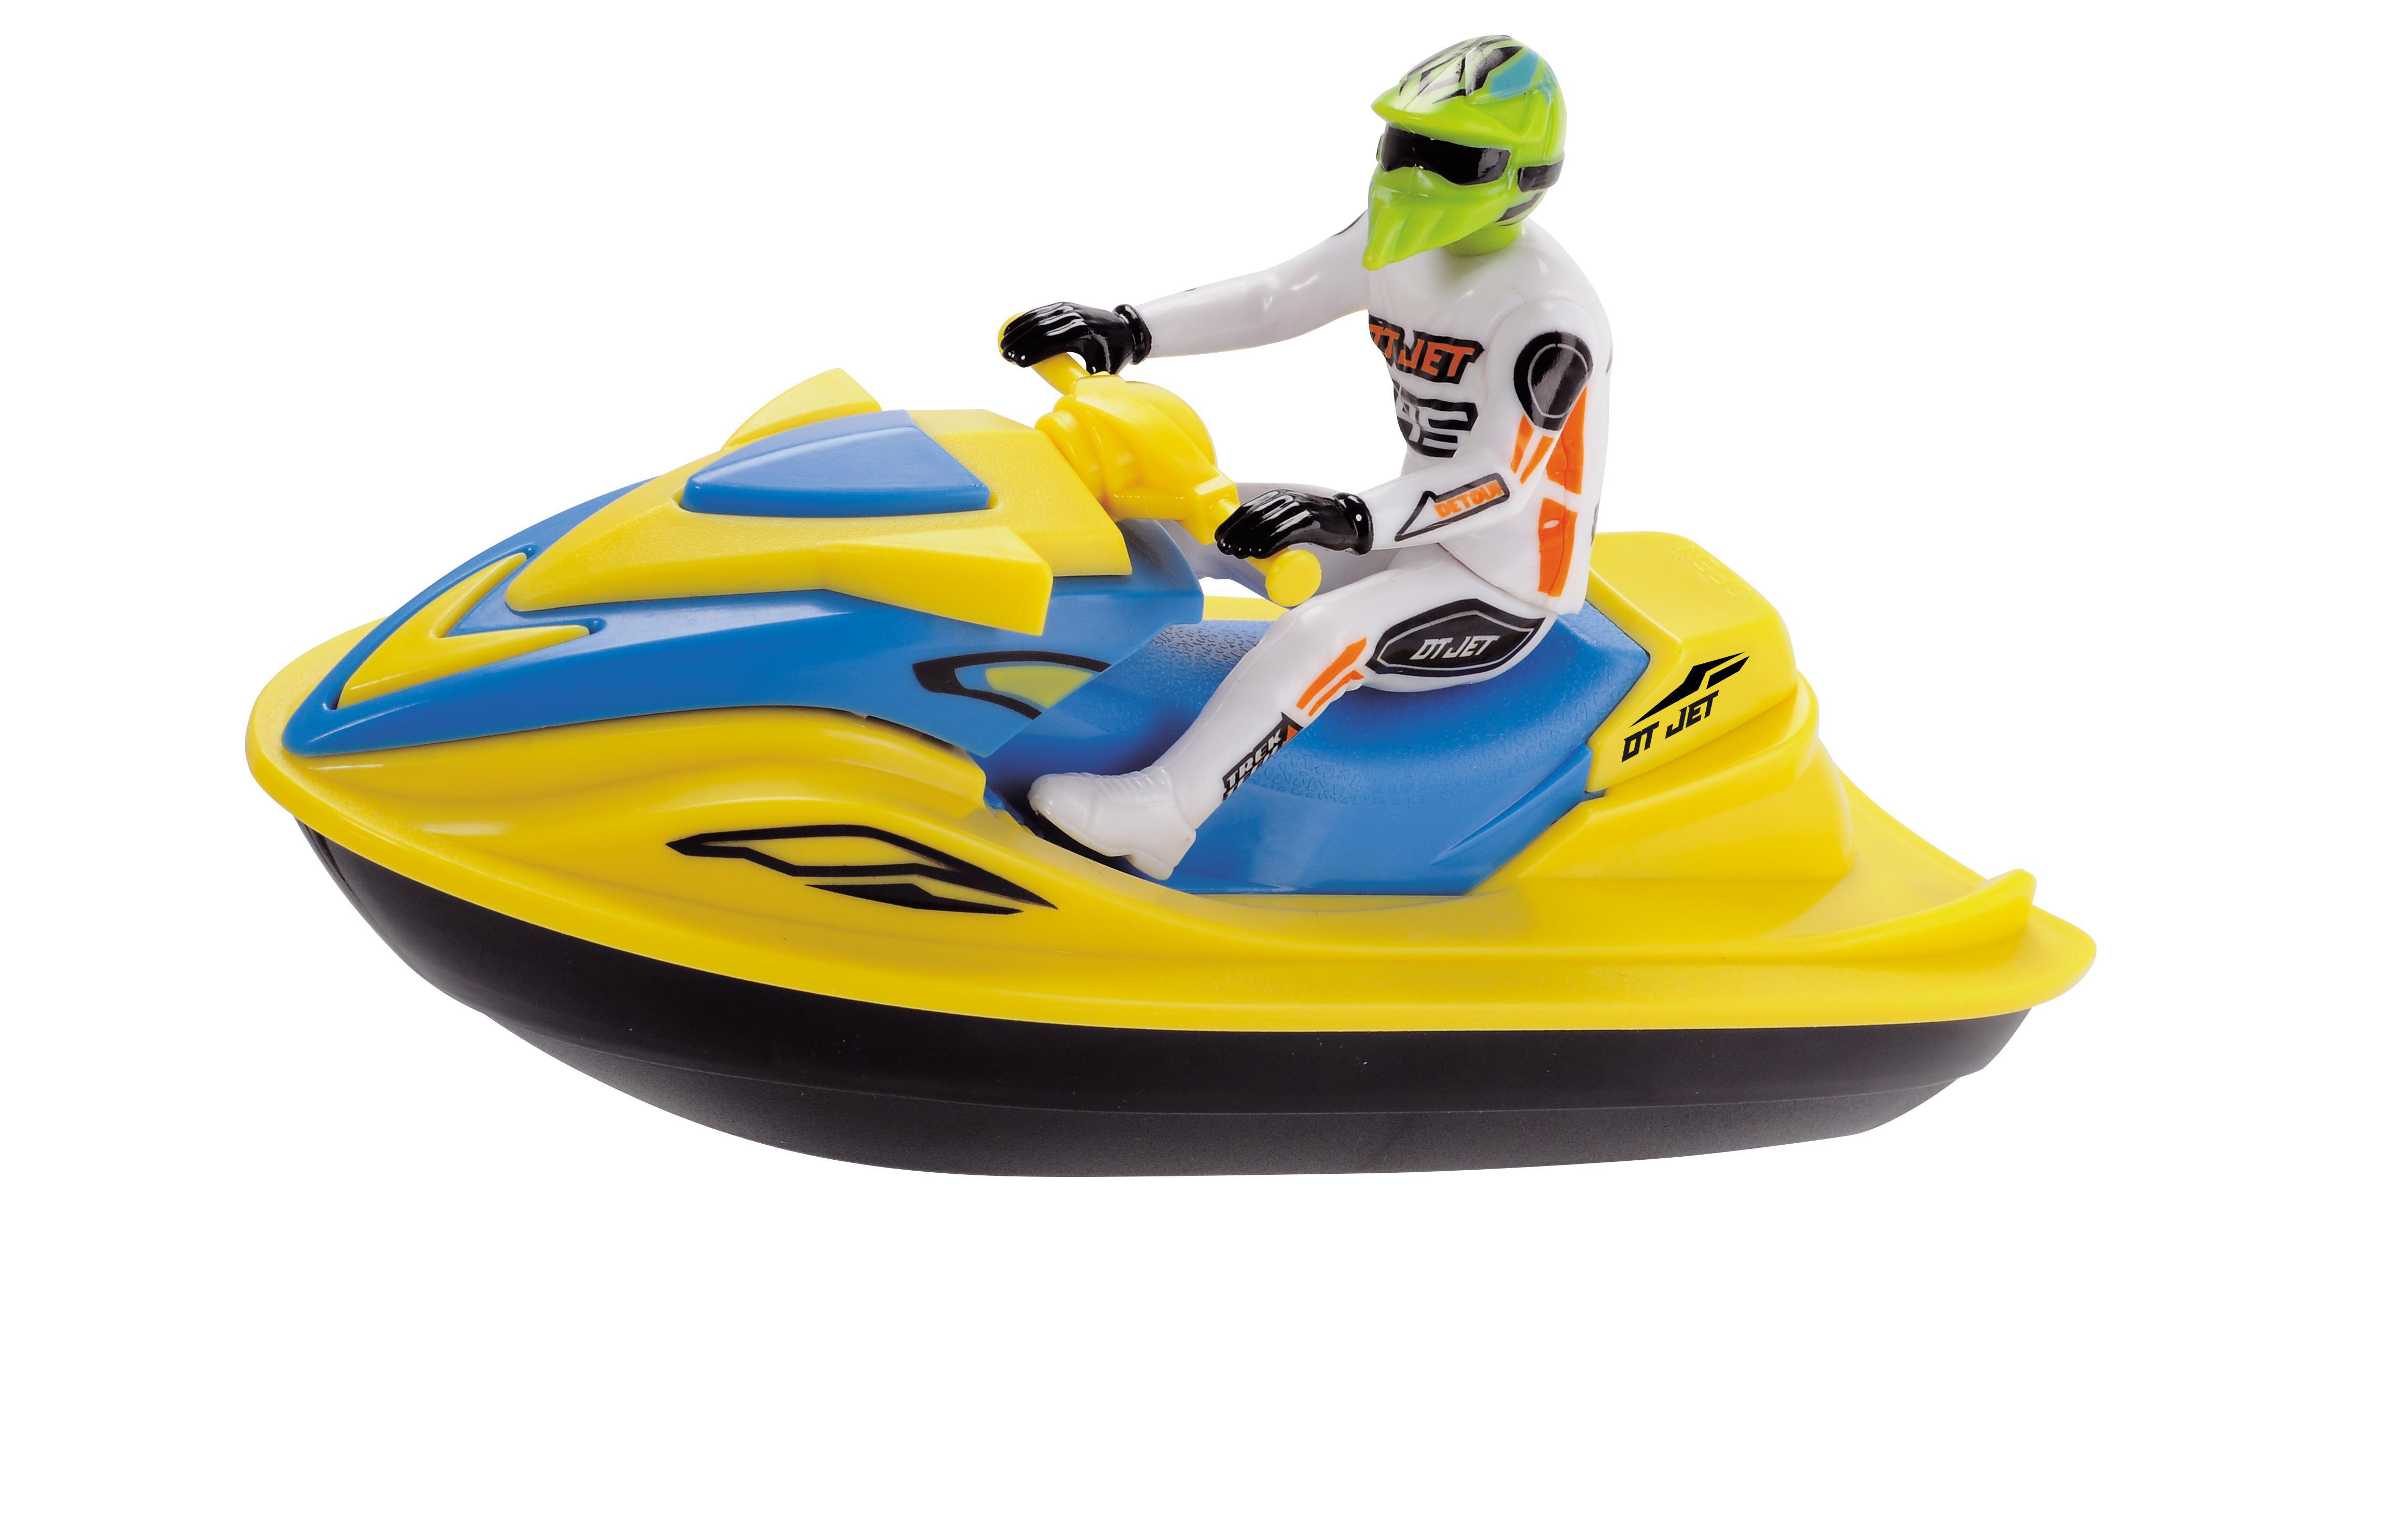 Ski Mehrfarbig Jet Spielzeugauto mit 2-sortiert Figur, DICKIE-TOYS